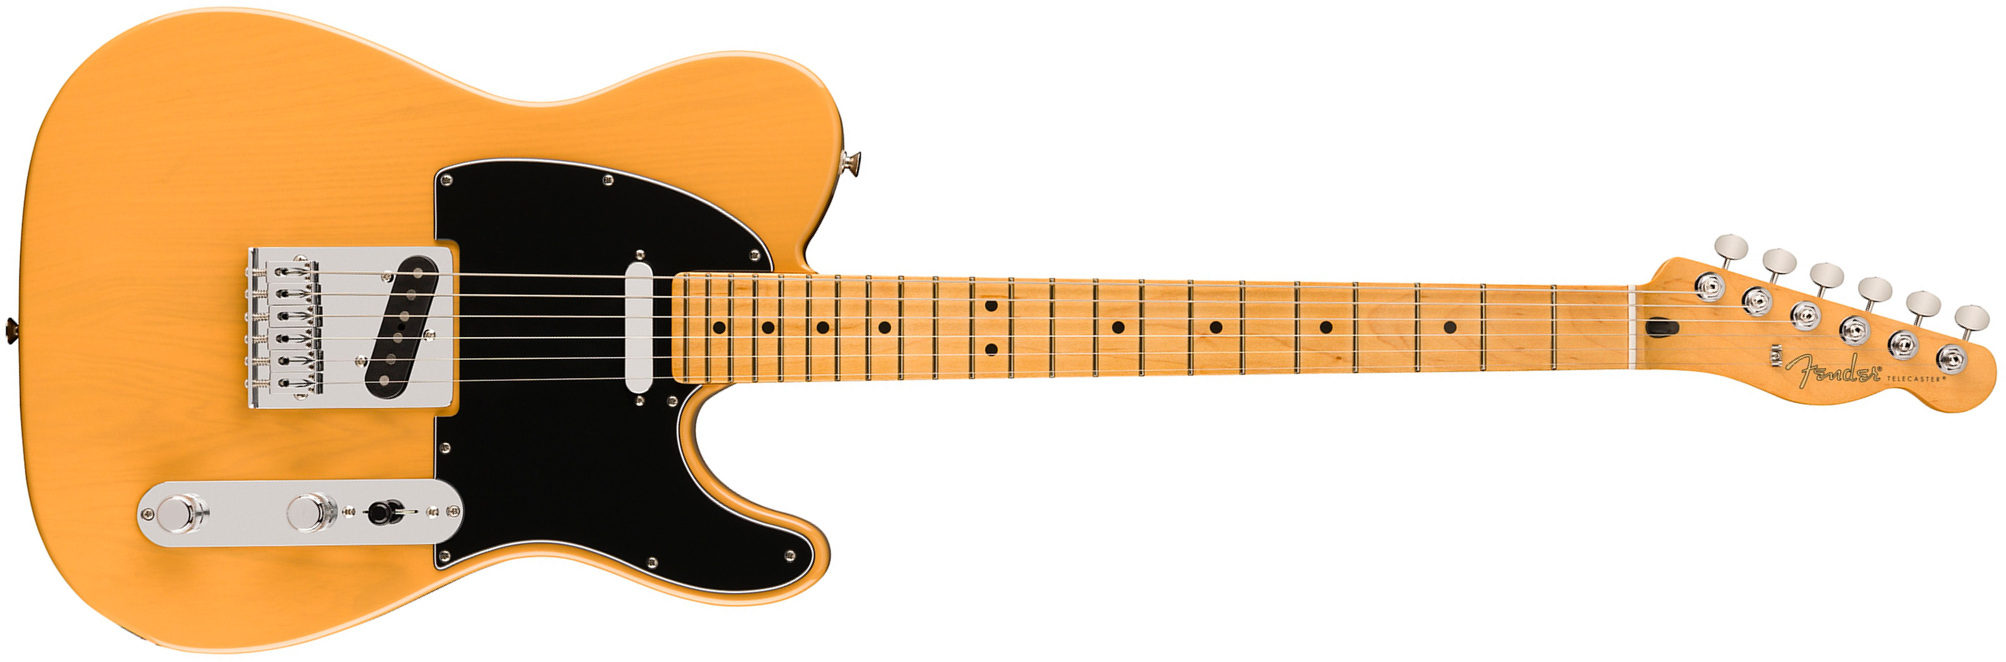 Fender Tele Player Ii Mex Frene 2s Ht Mn - Butterscotch Blonde - Televorm elektrische gitaar - Main picture